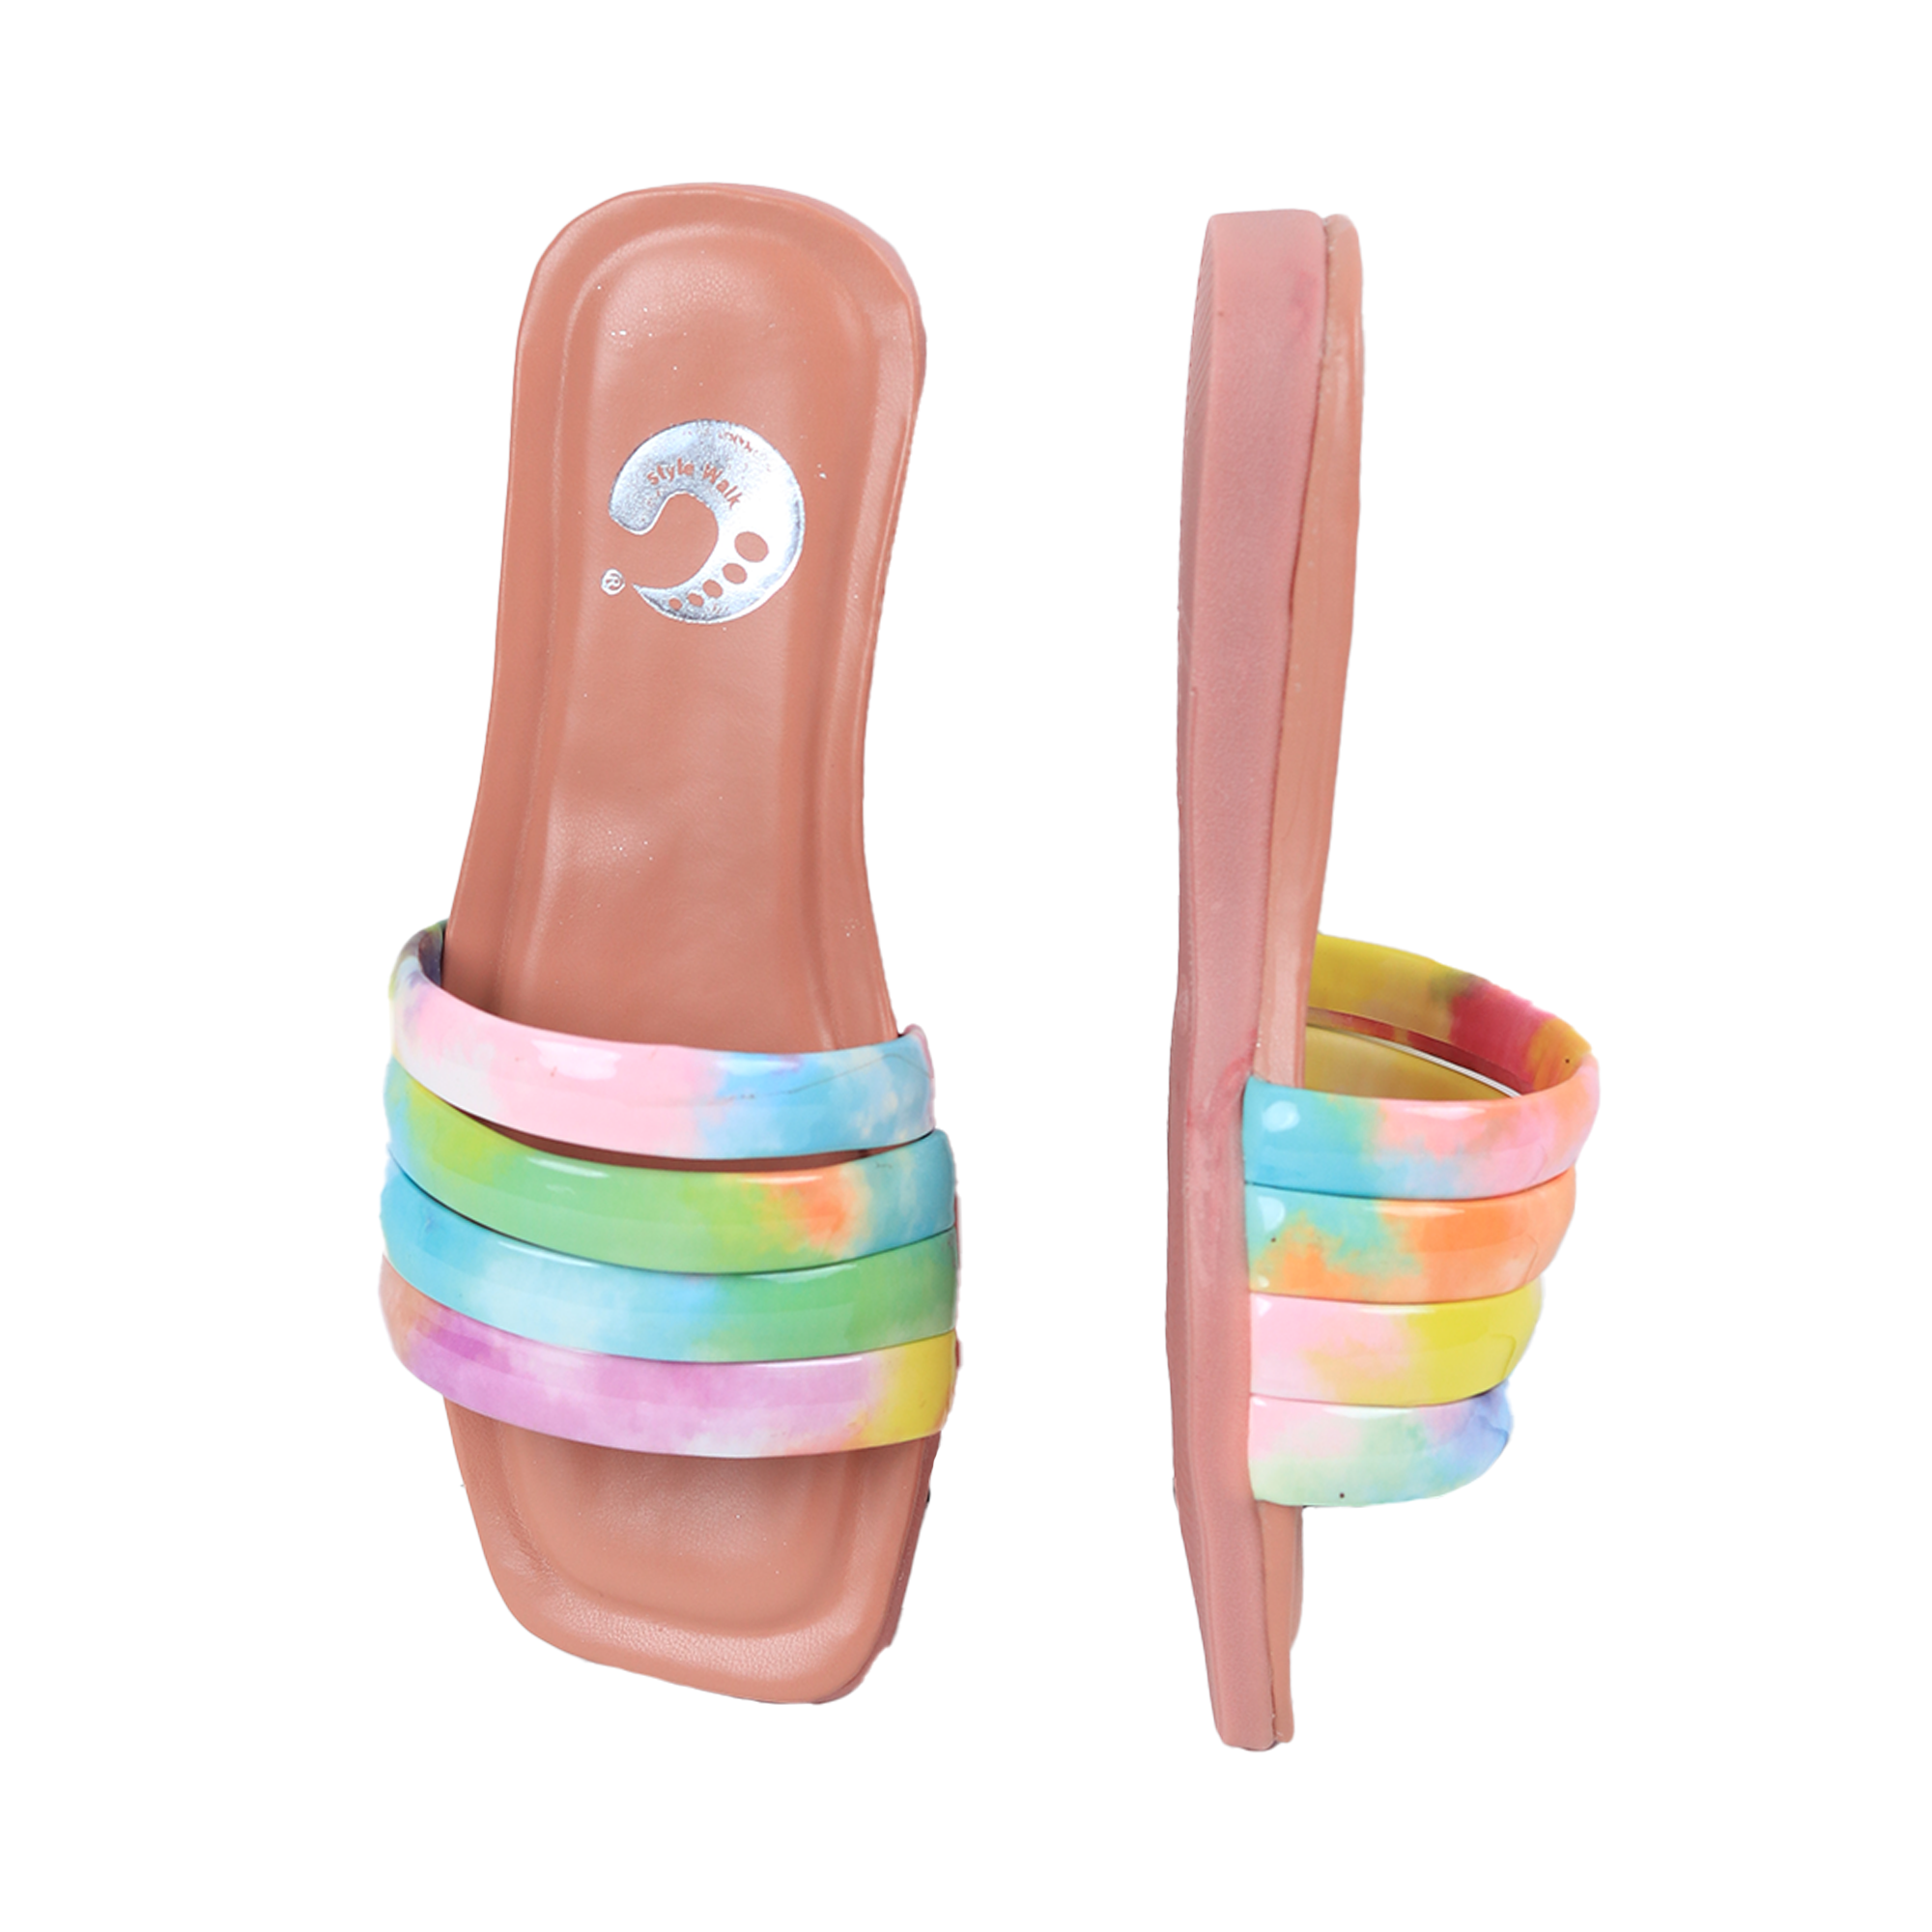 Slip-on Sandals Multi Color